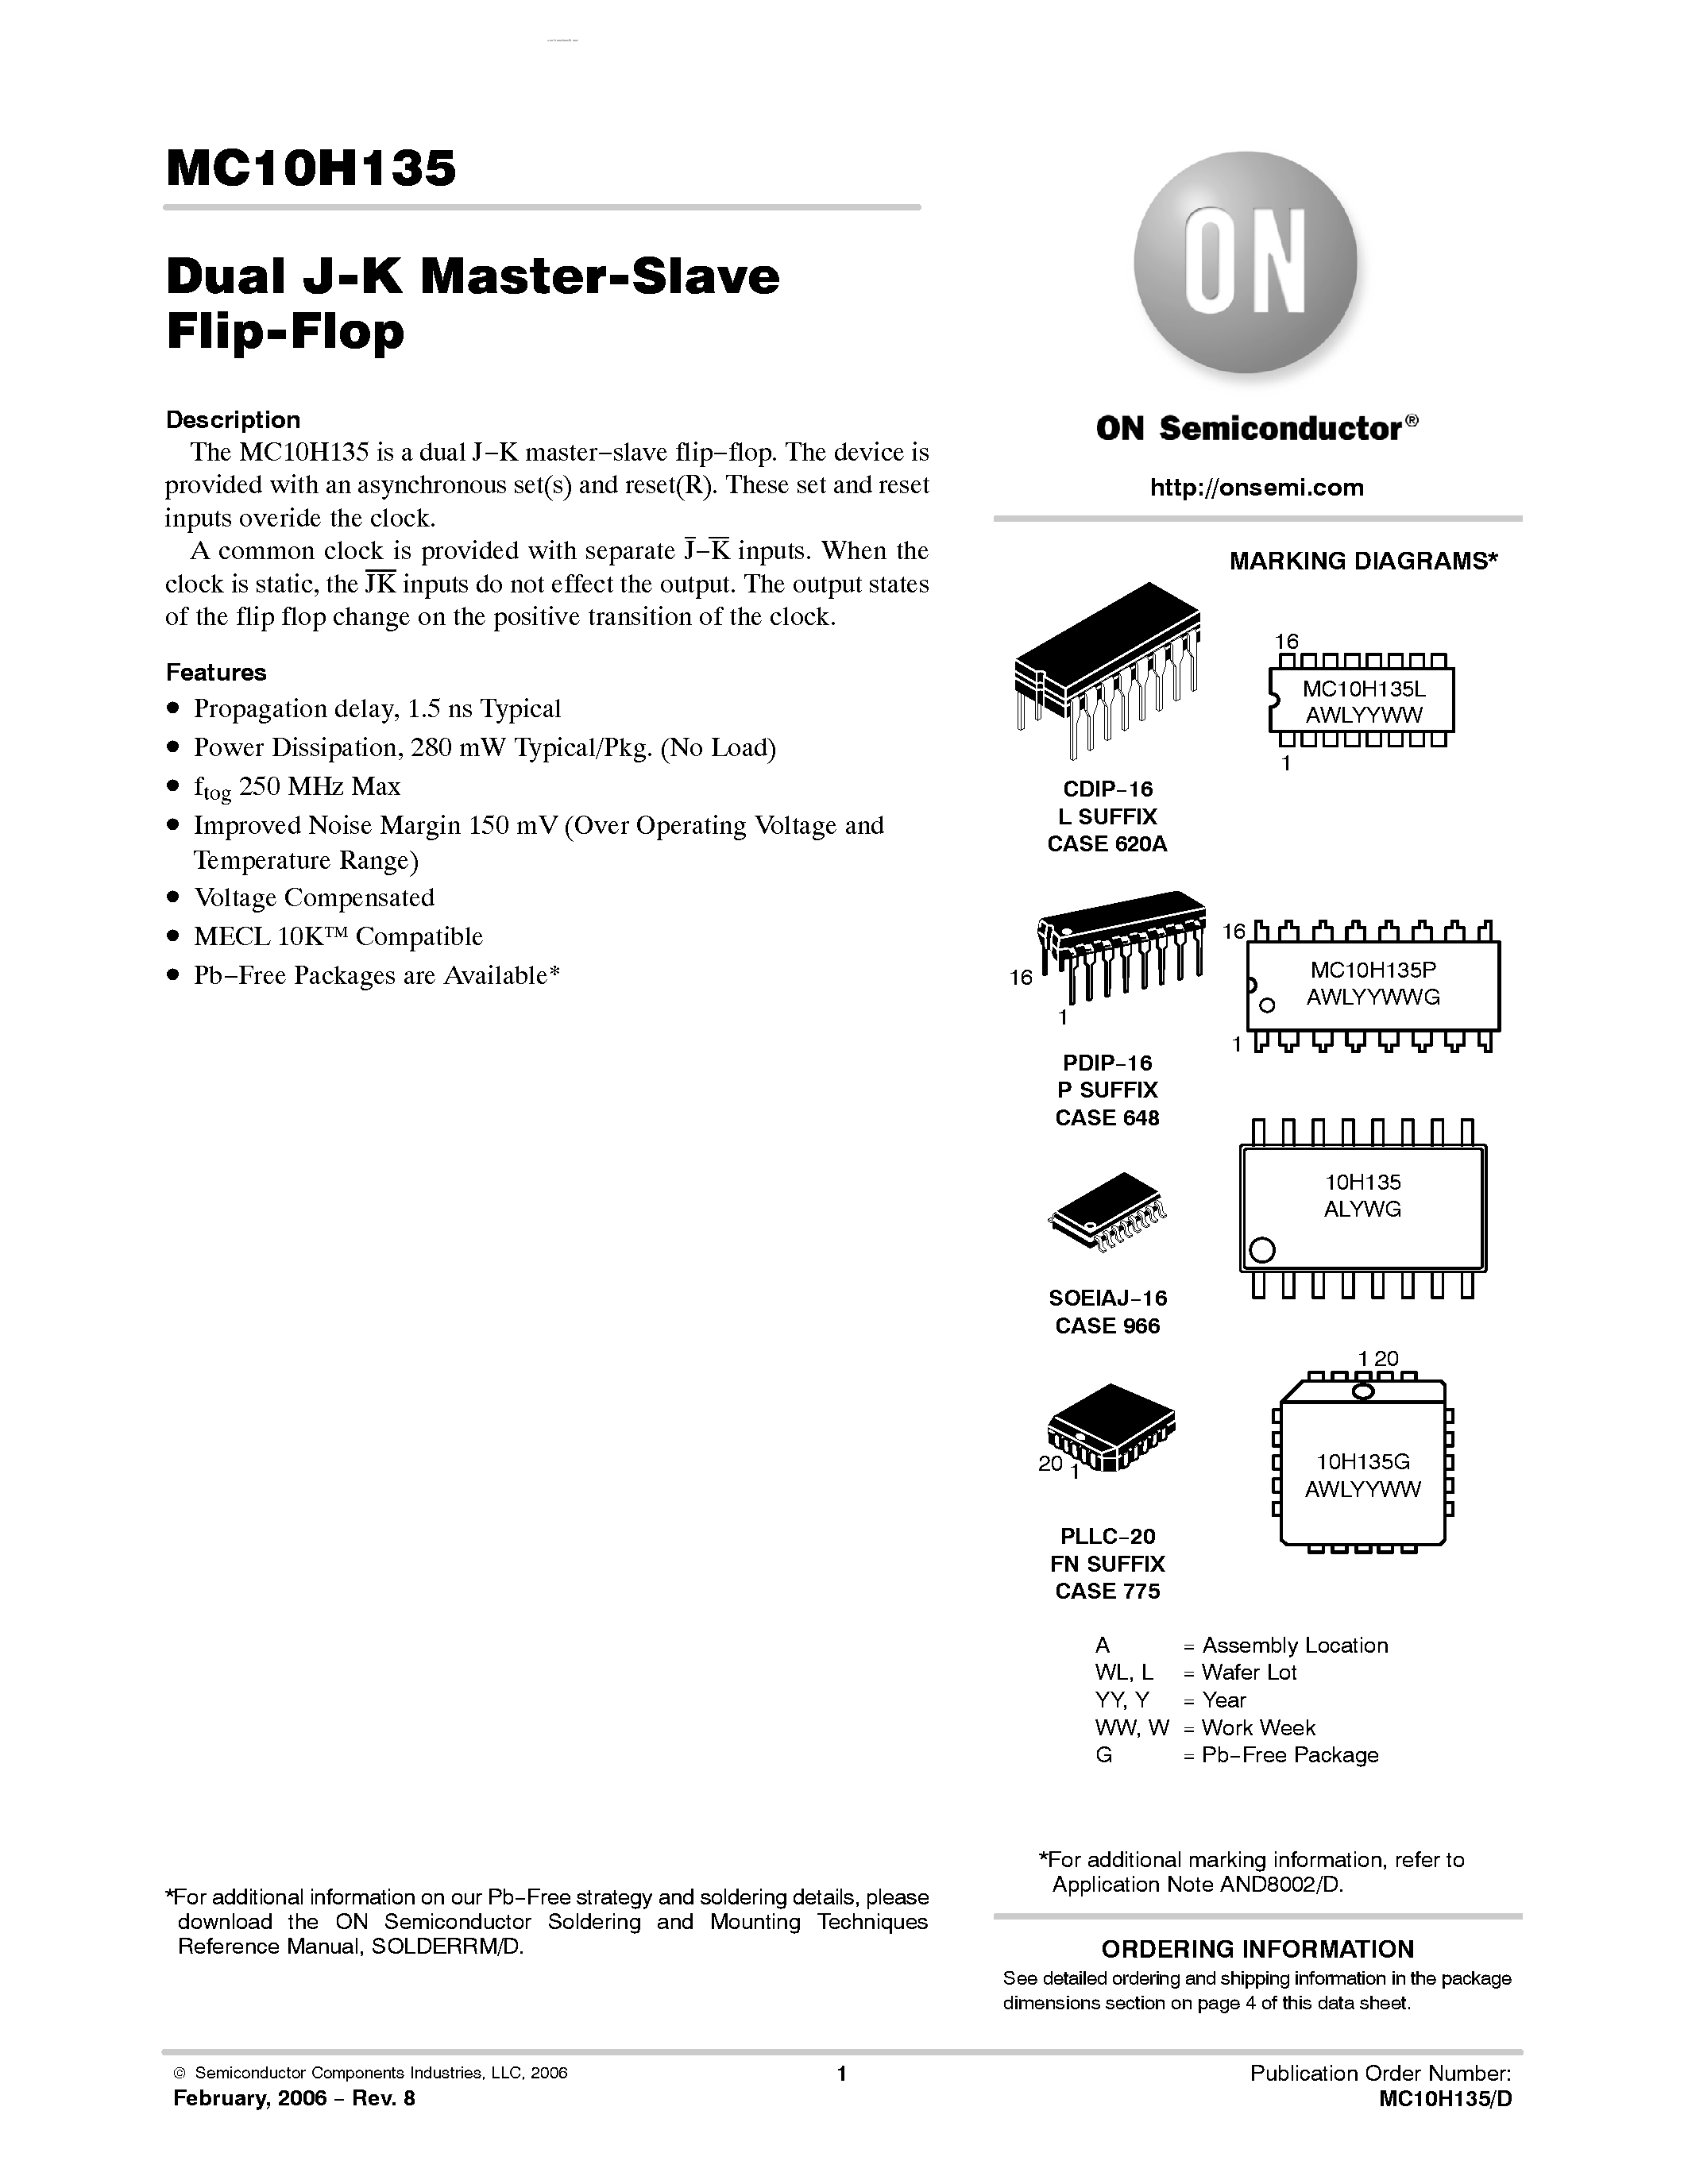 Datasheet MC10H135 - Dual J-K Master-Slave Flip-Flop page 1